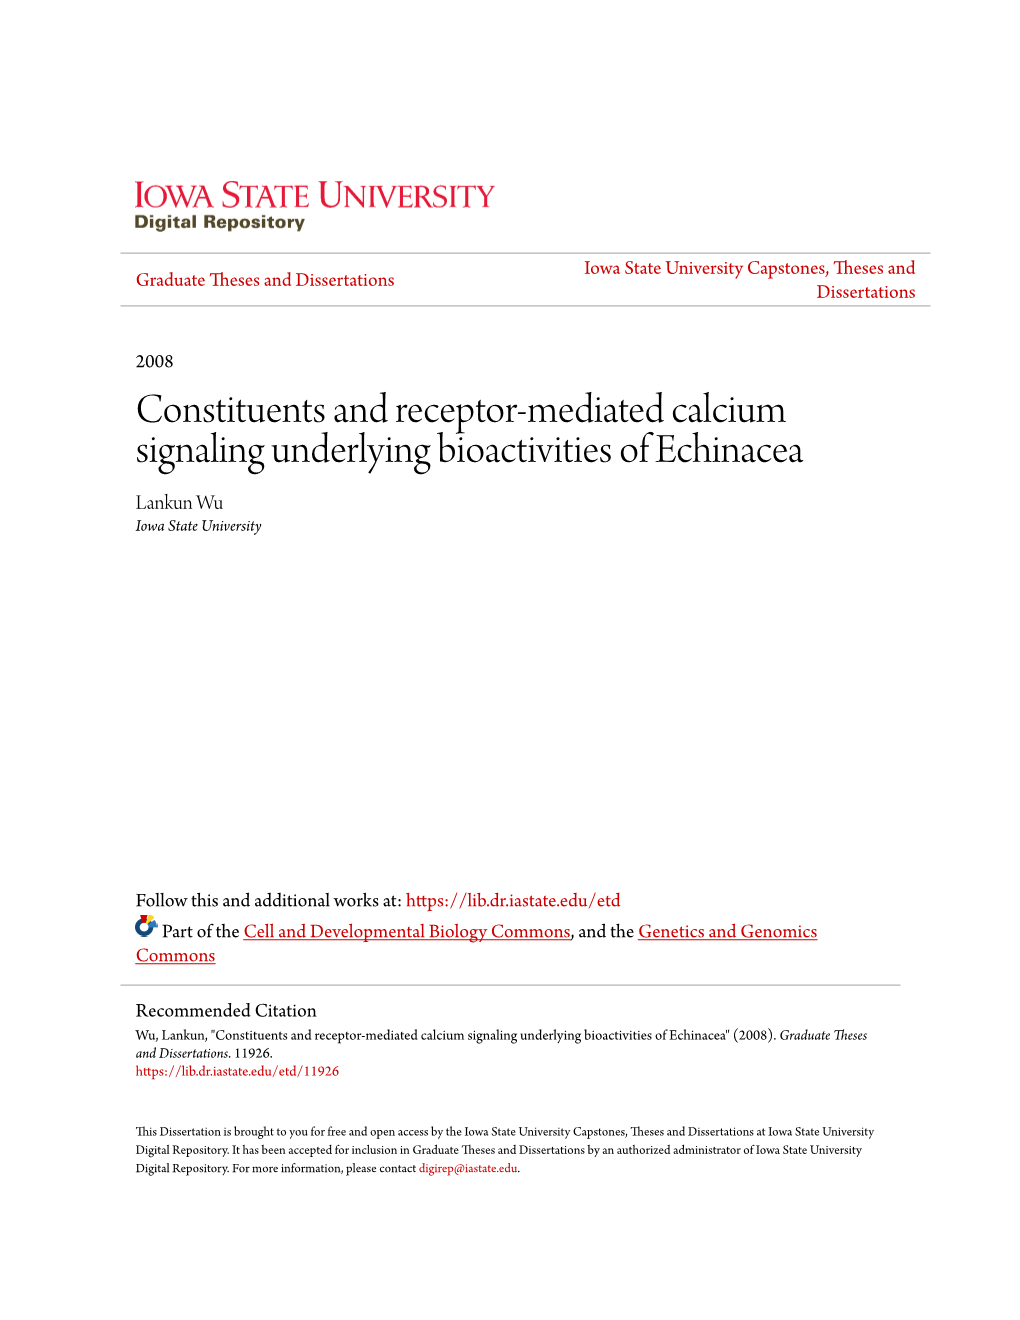 Constituents and Receptor-Mediated Calcium Signaling Underlying Bioactivities of Echinacea Lankun Wu Iowa State University